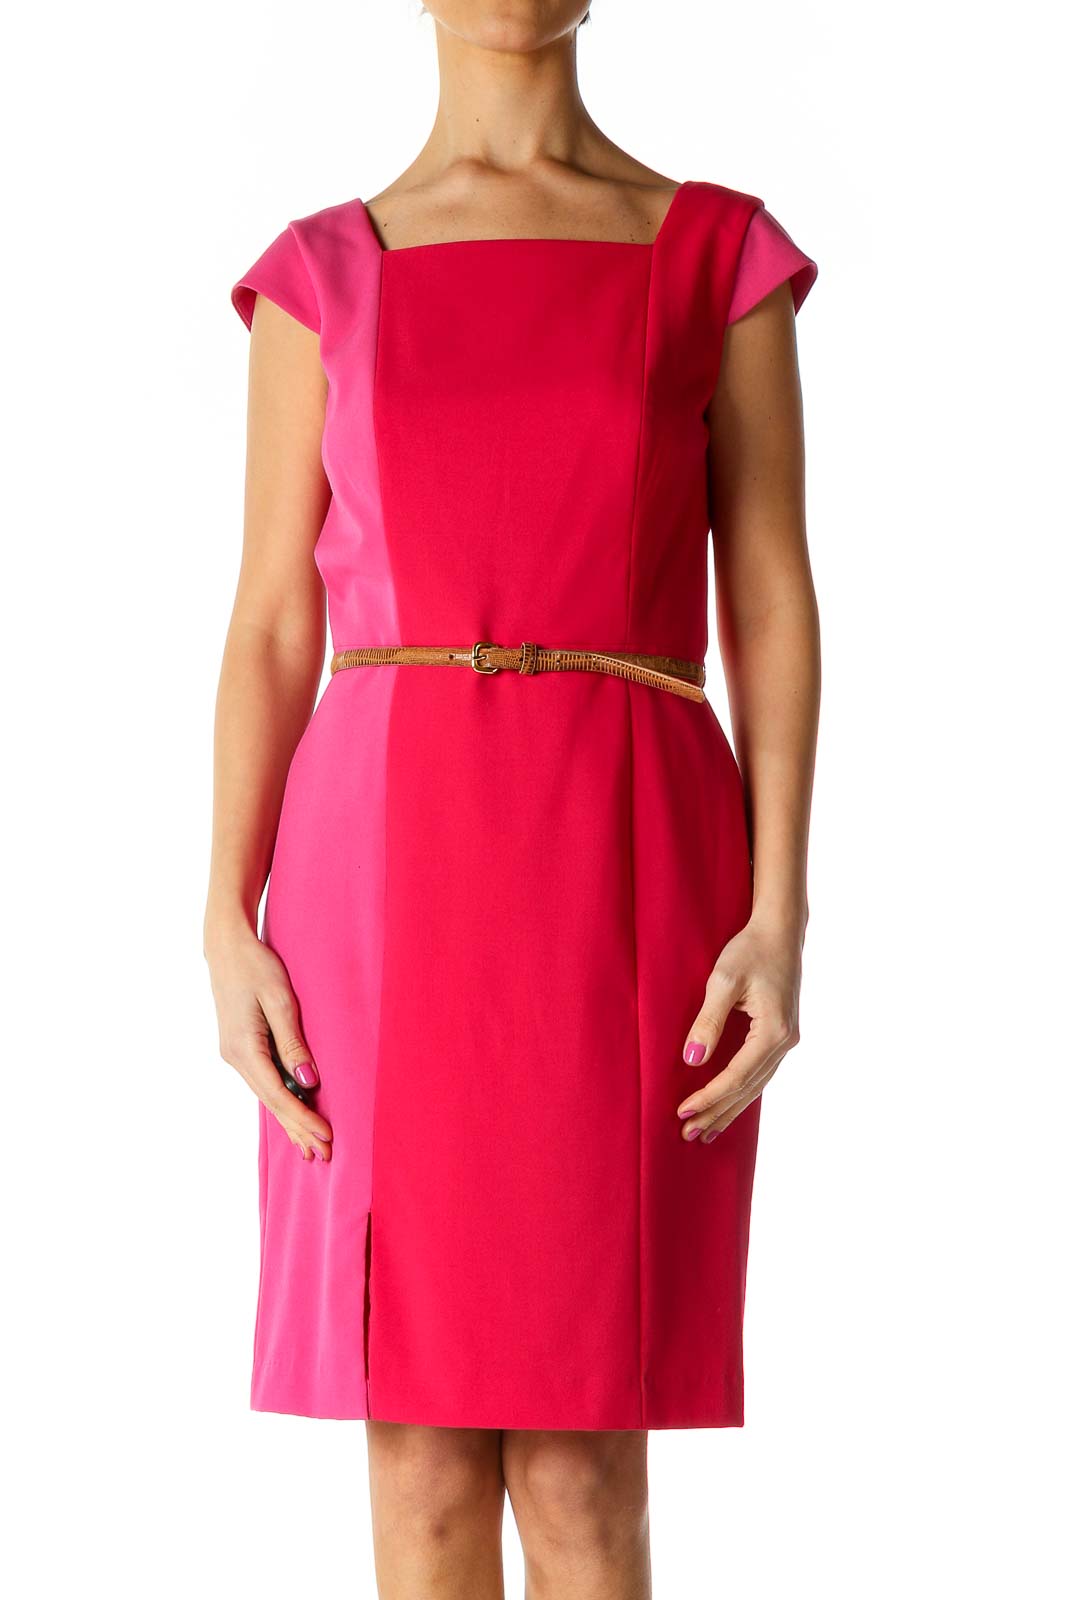 Calvin Klein - Red Solid Sheath Dress Polyester Spandex Rayon | SilkRoll